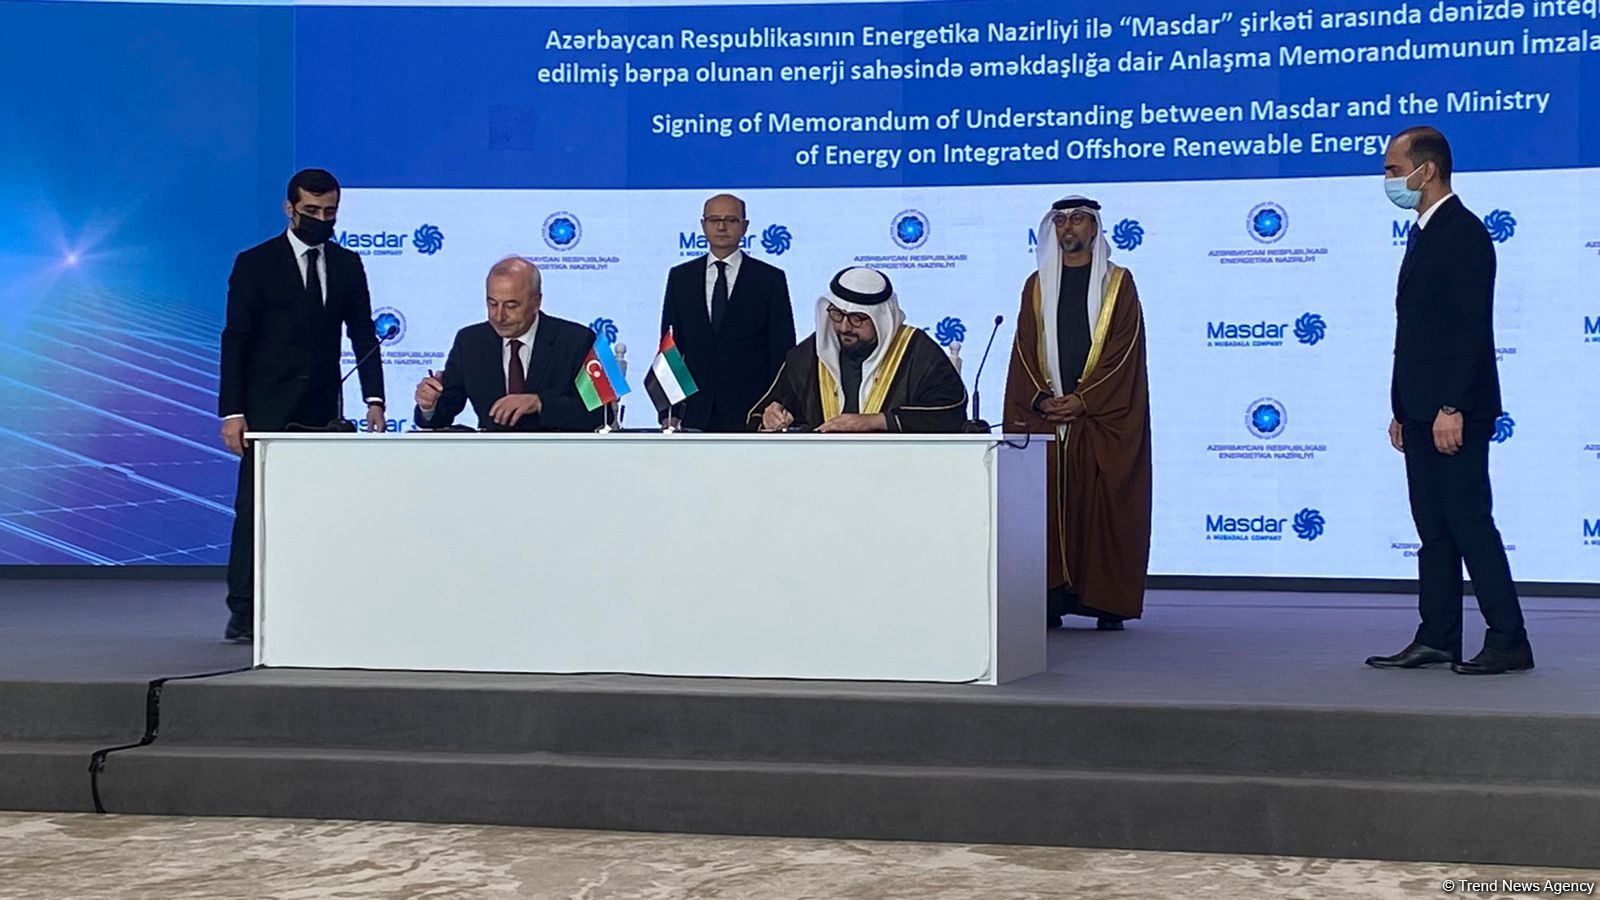 Azerbaijan, UAE’s Masdar company sign several agreements on renewable energy sources (PHOTO)